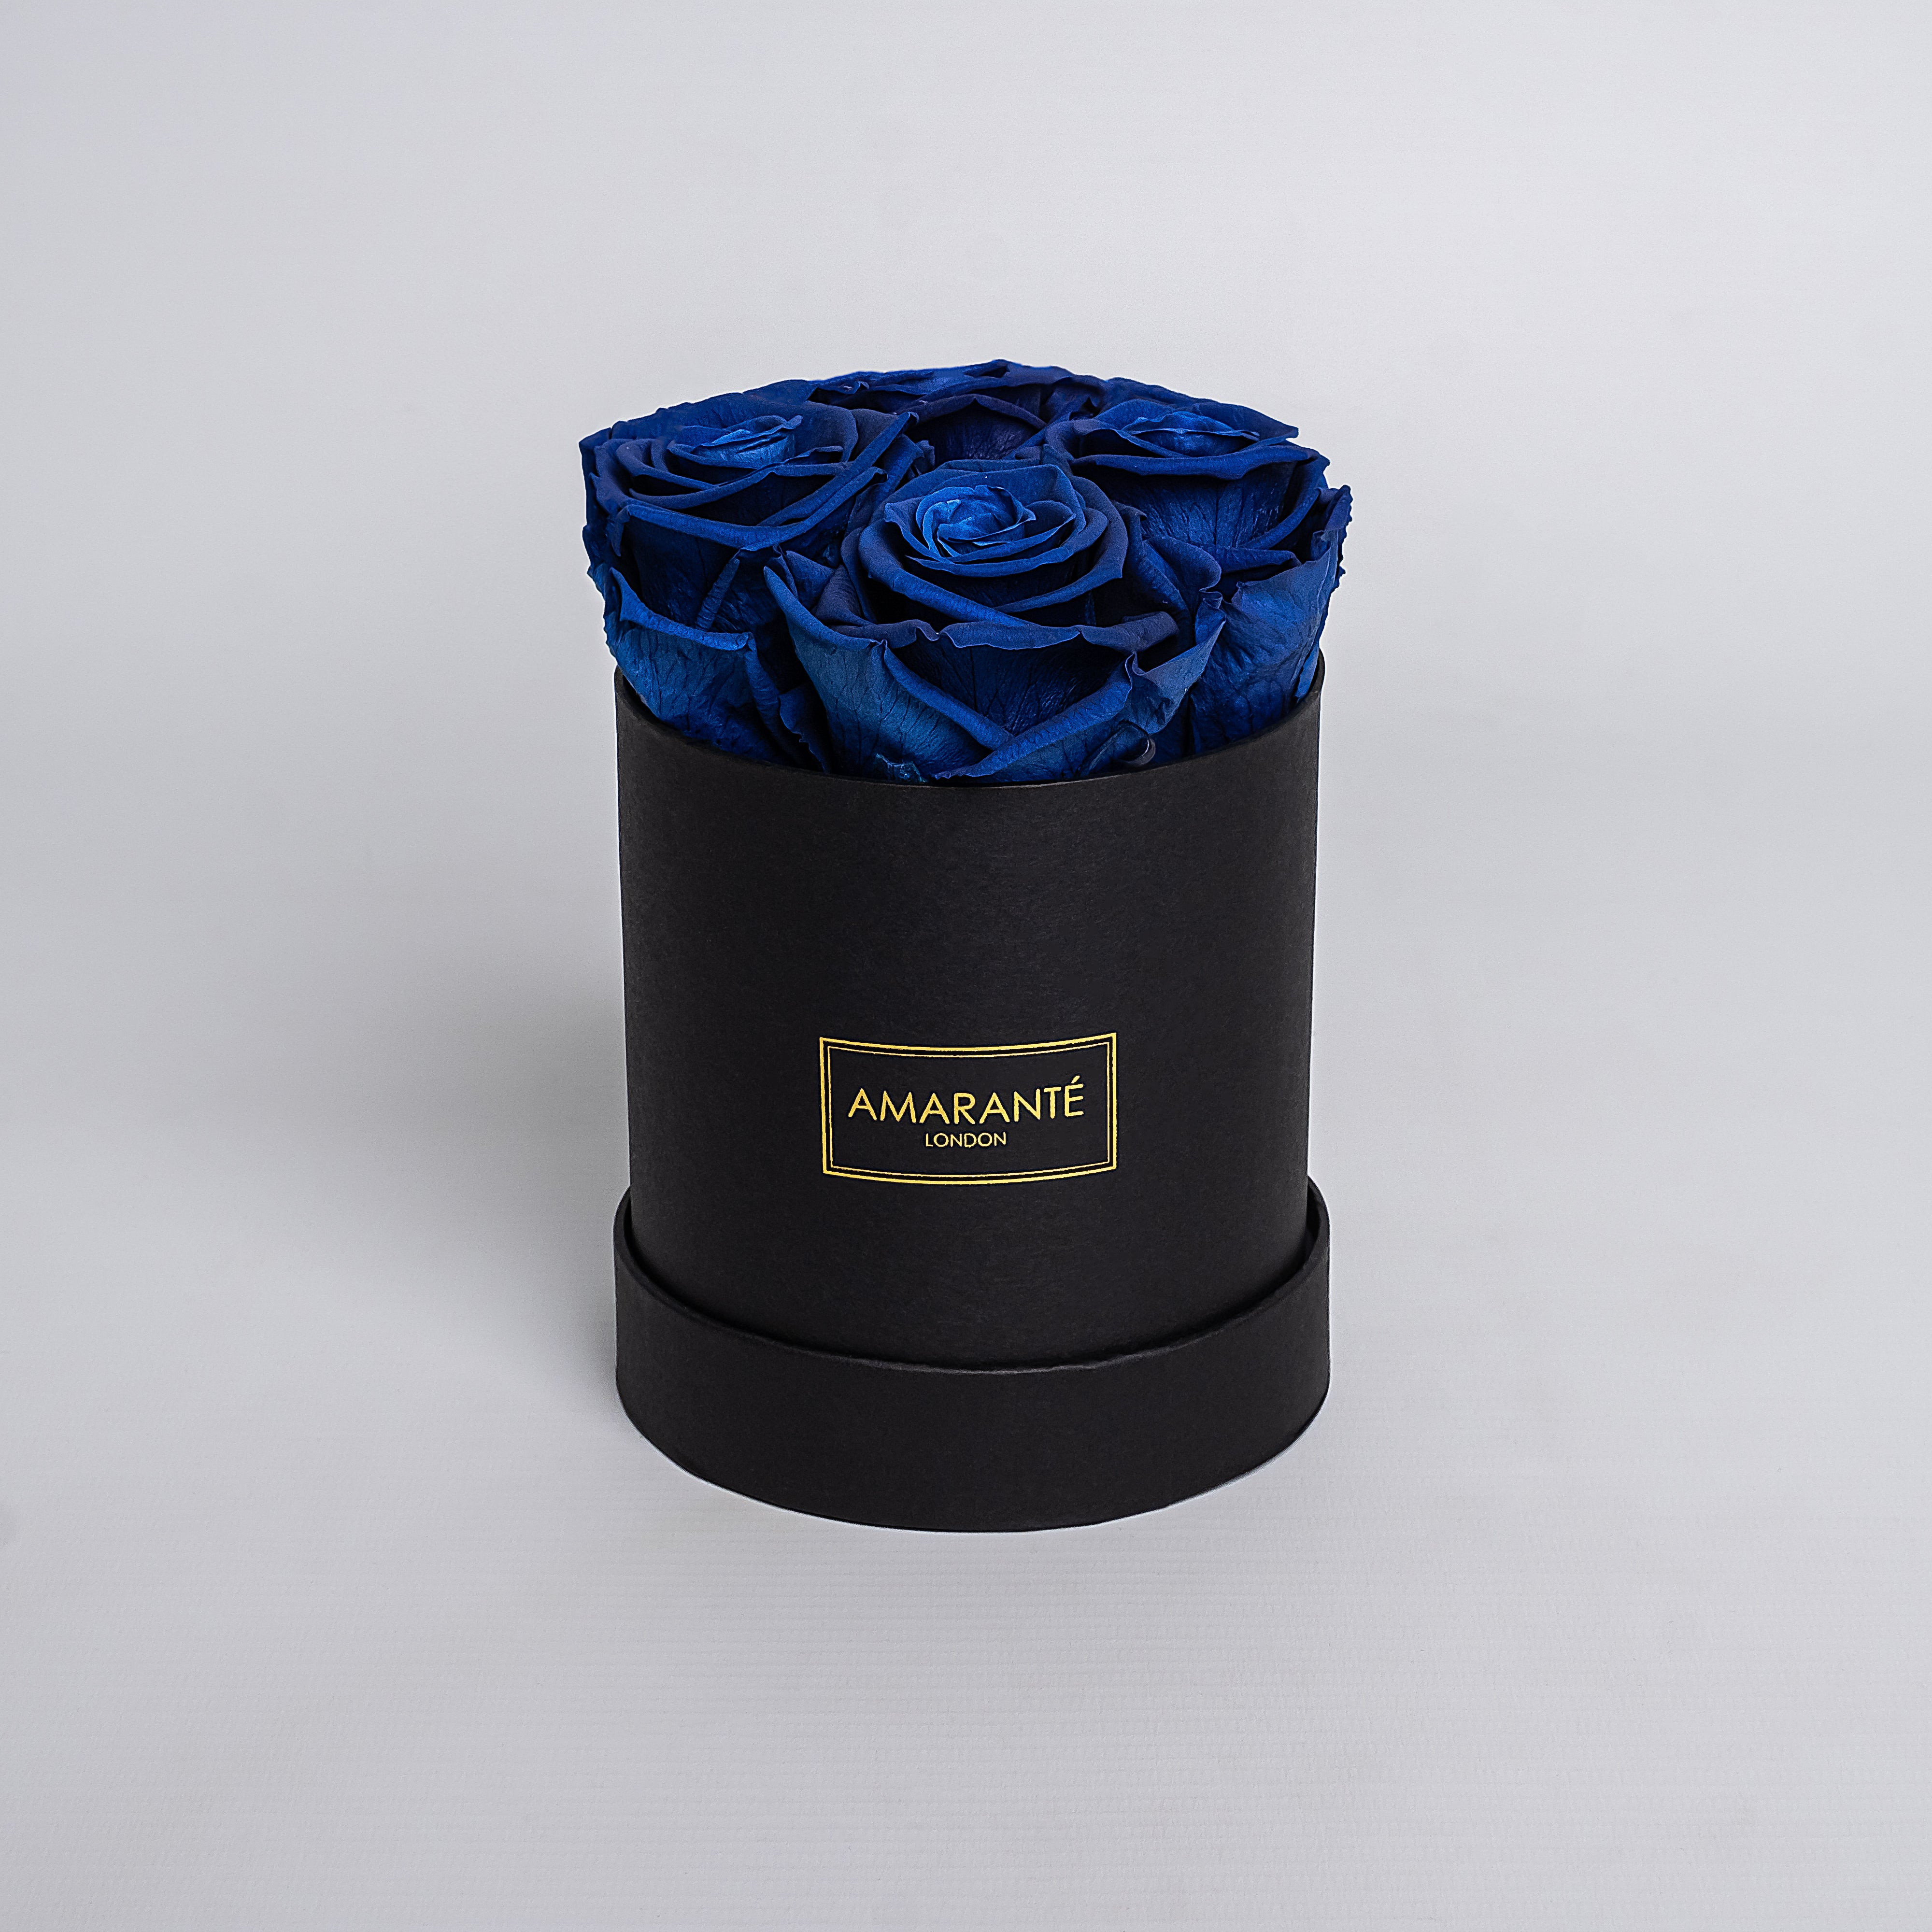 Small Black Round Matte Rose Box